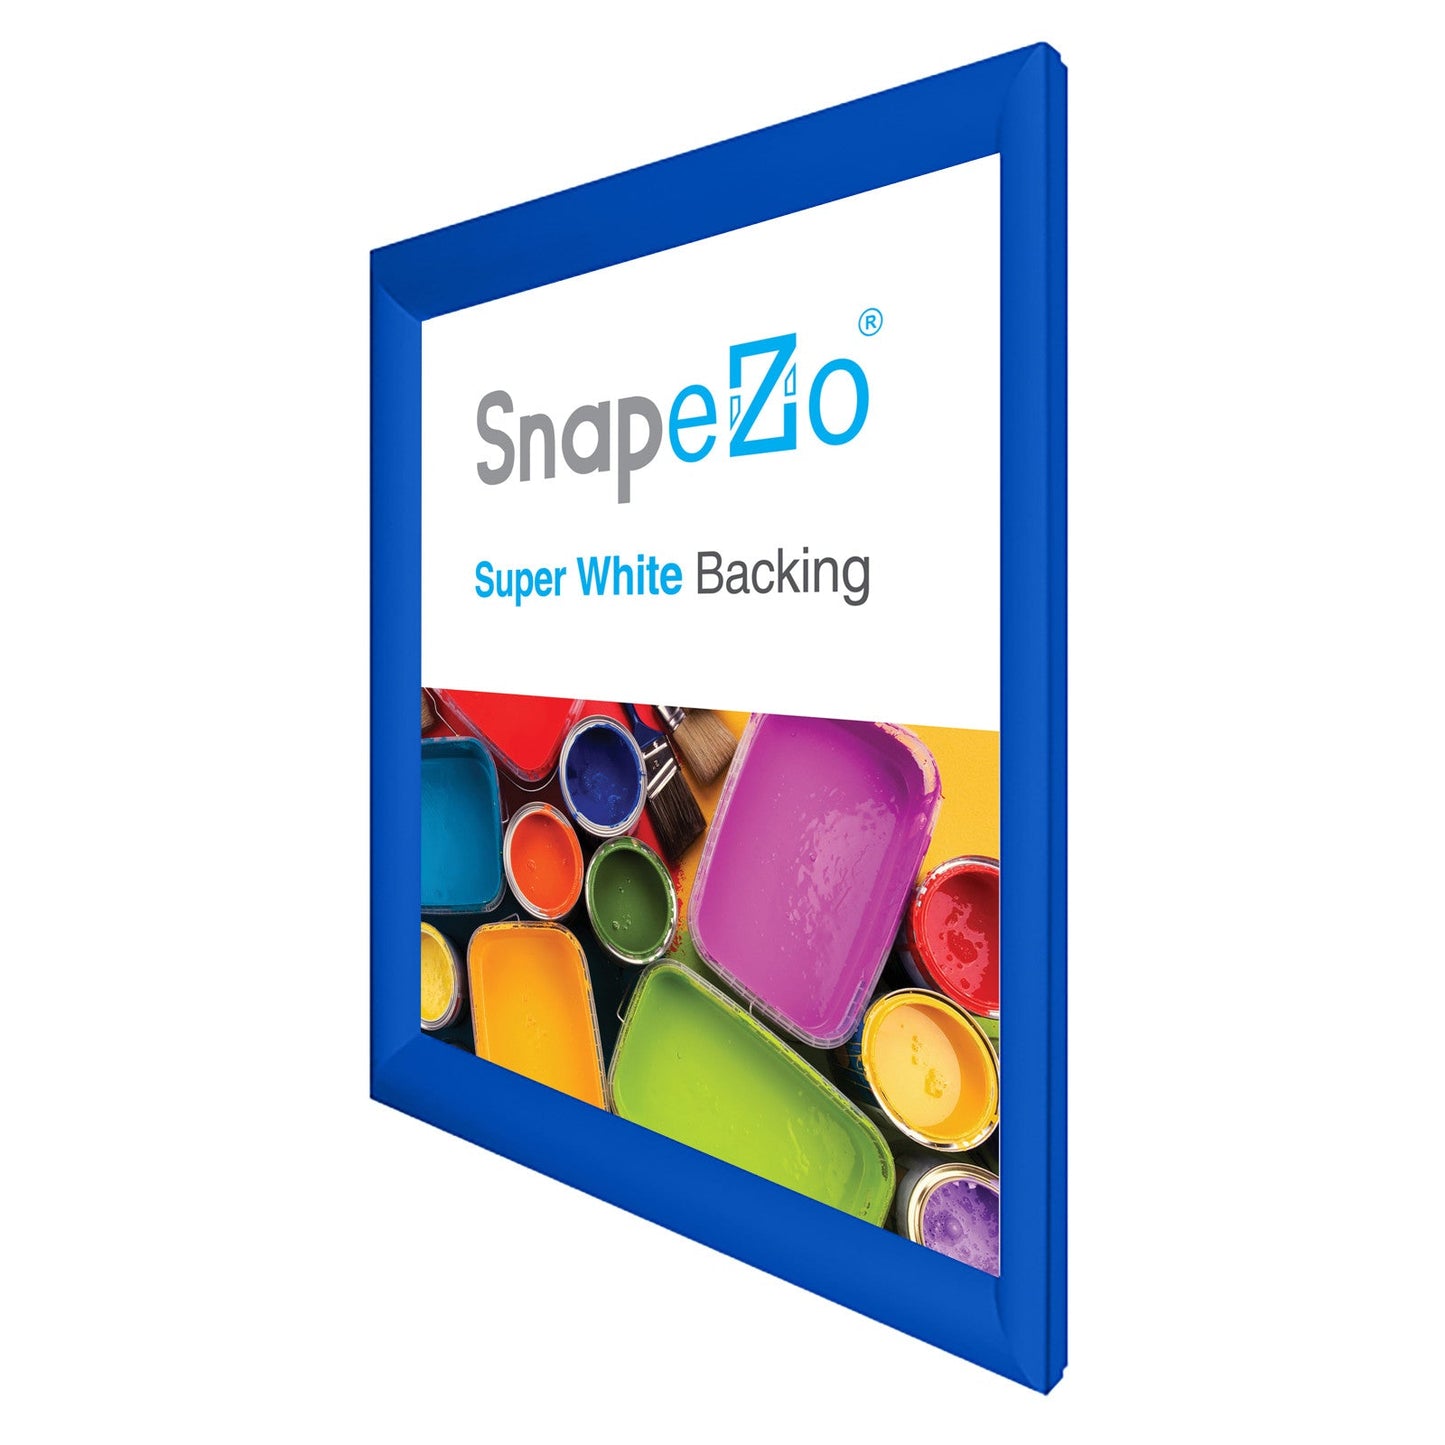 31x36 Blue SnapeZo® Snap Frame - 1.2" Profile